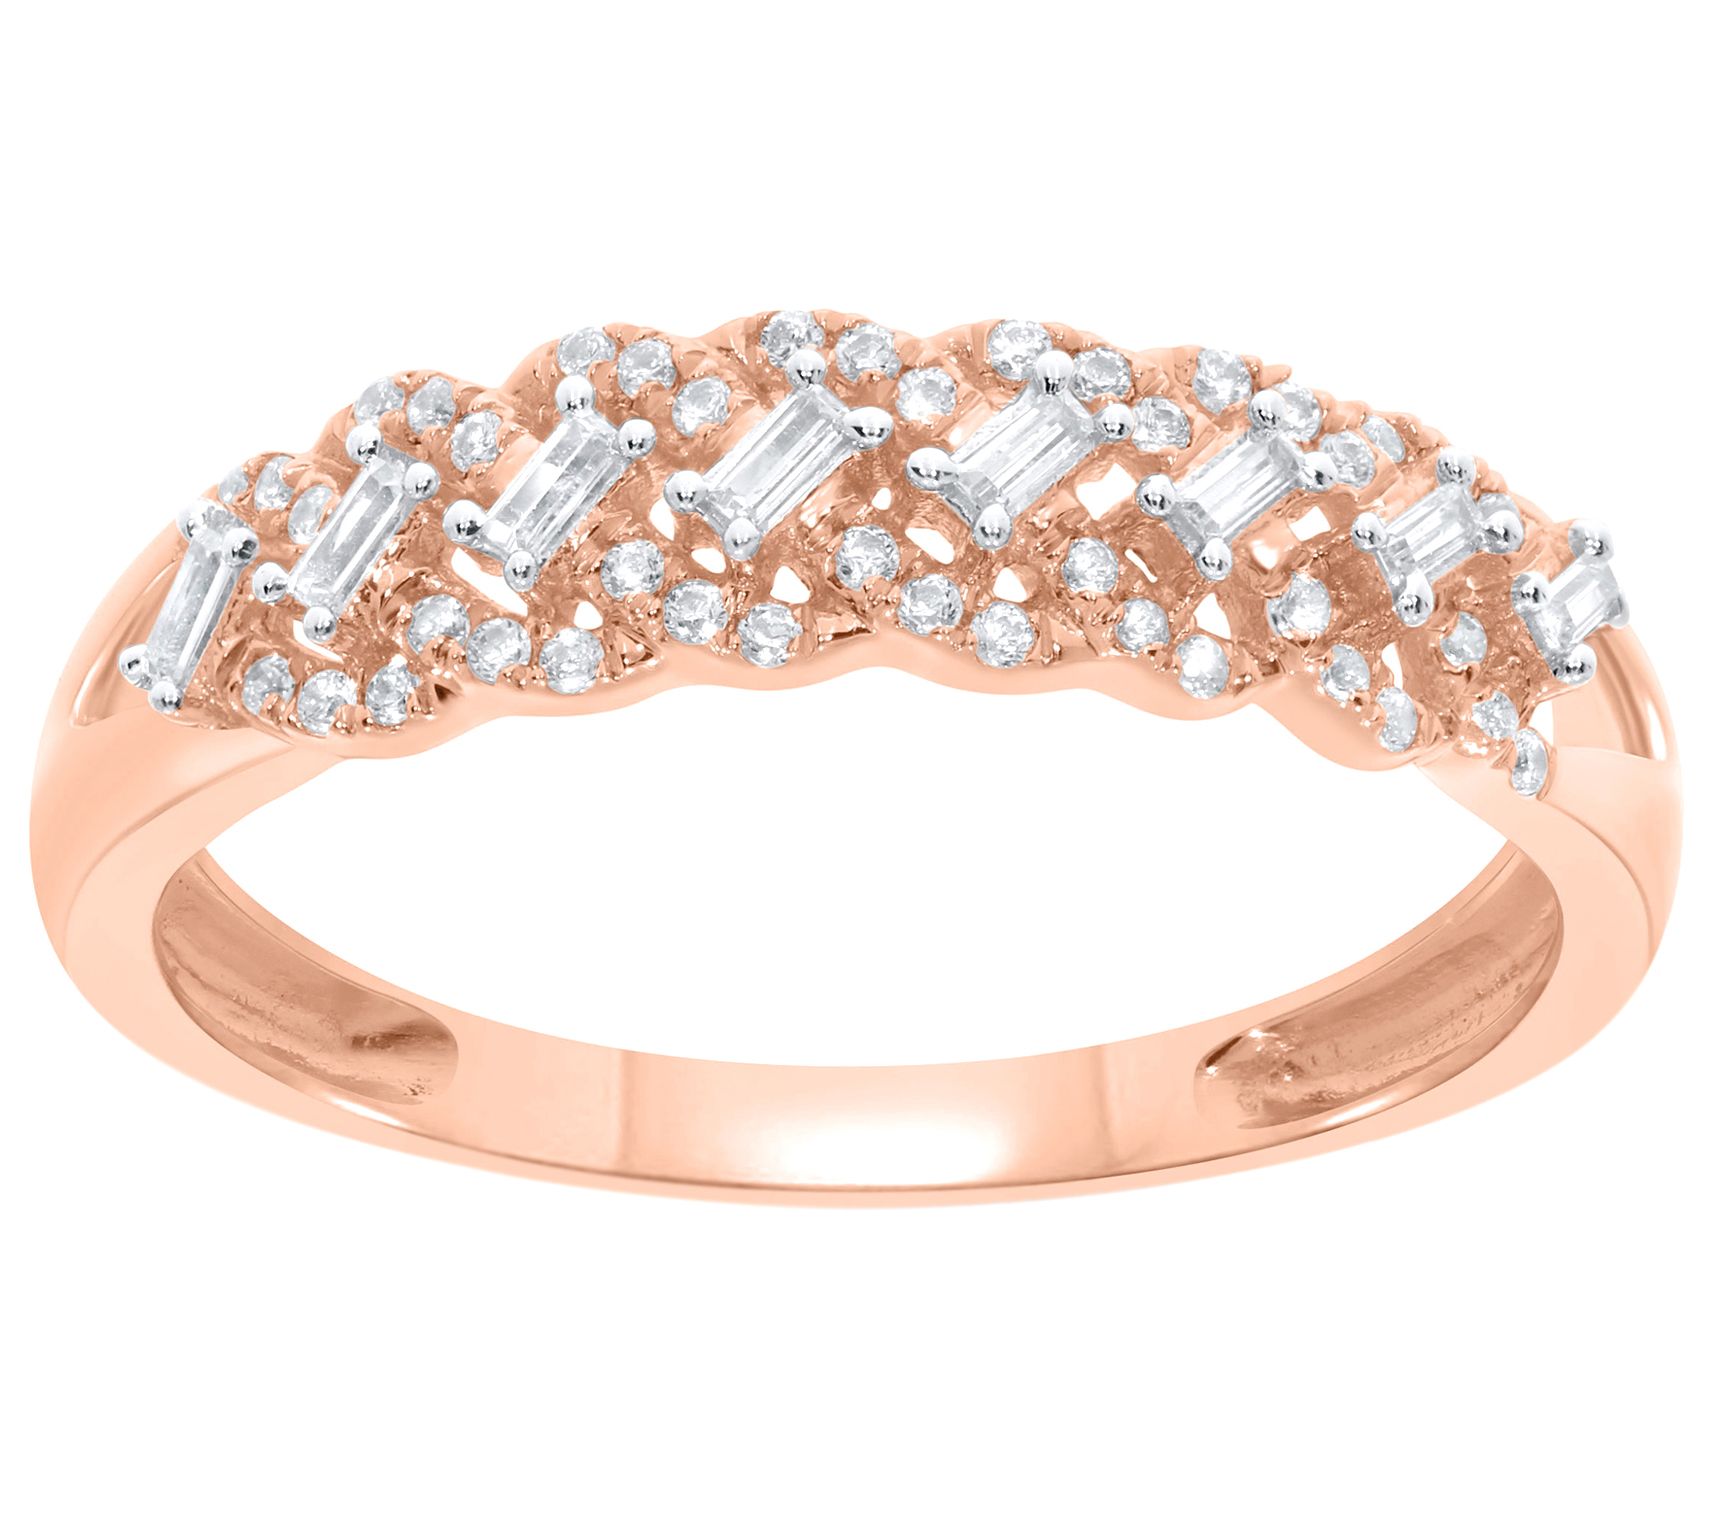 Baguette Diamond Anniversary Band Ring, 14K Gold, Size 8, Rose